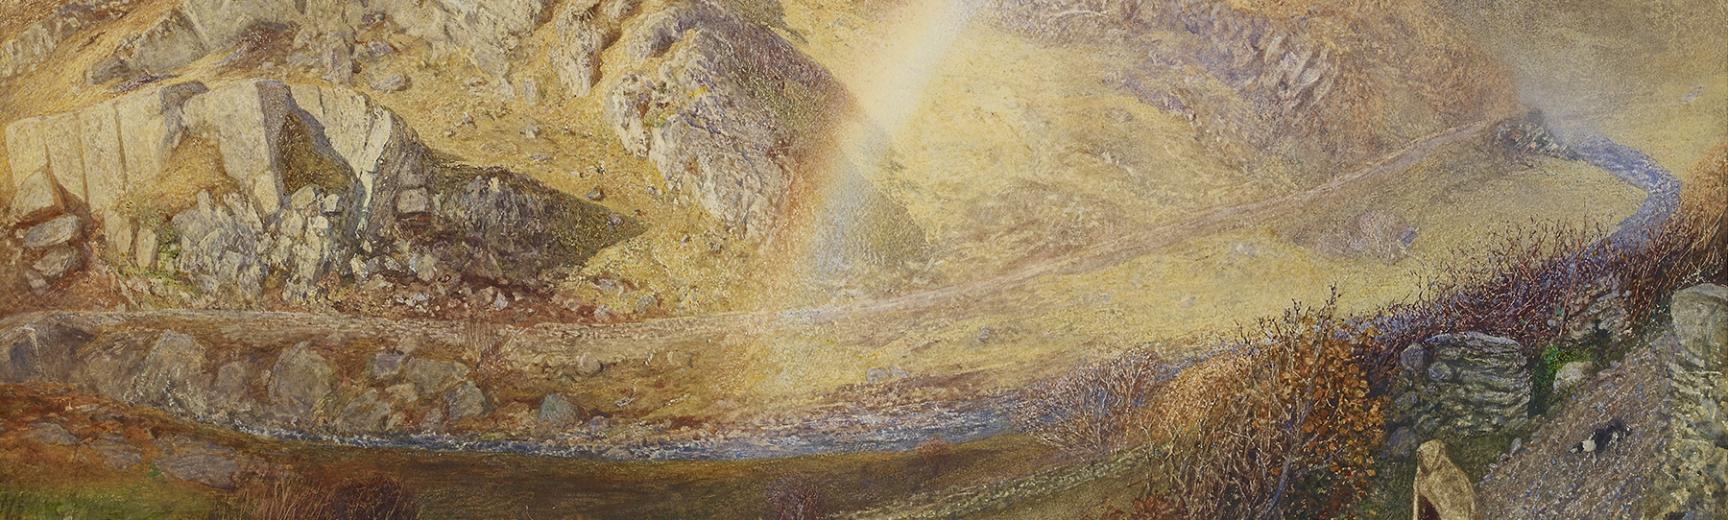 A W Hunt - Rainbow, Dolwyddelan Valley at the Ashmolean Museum